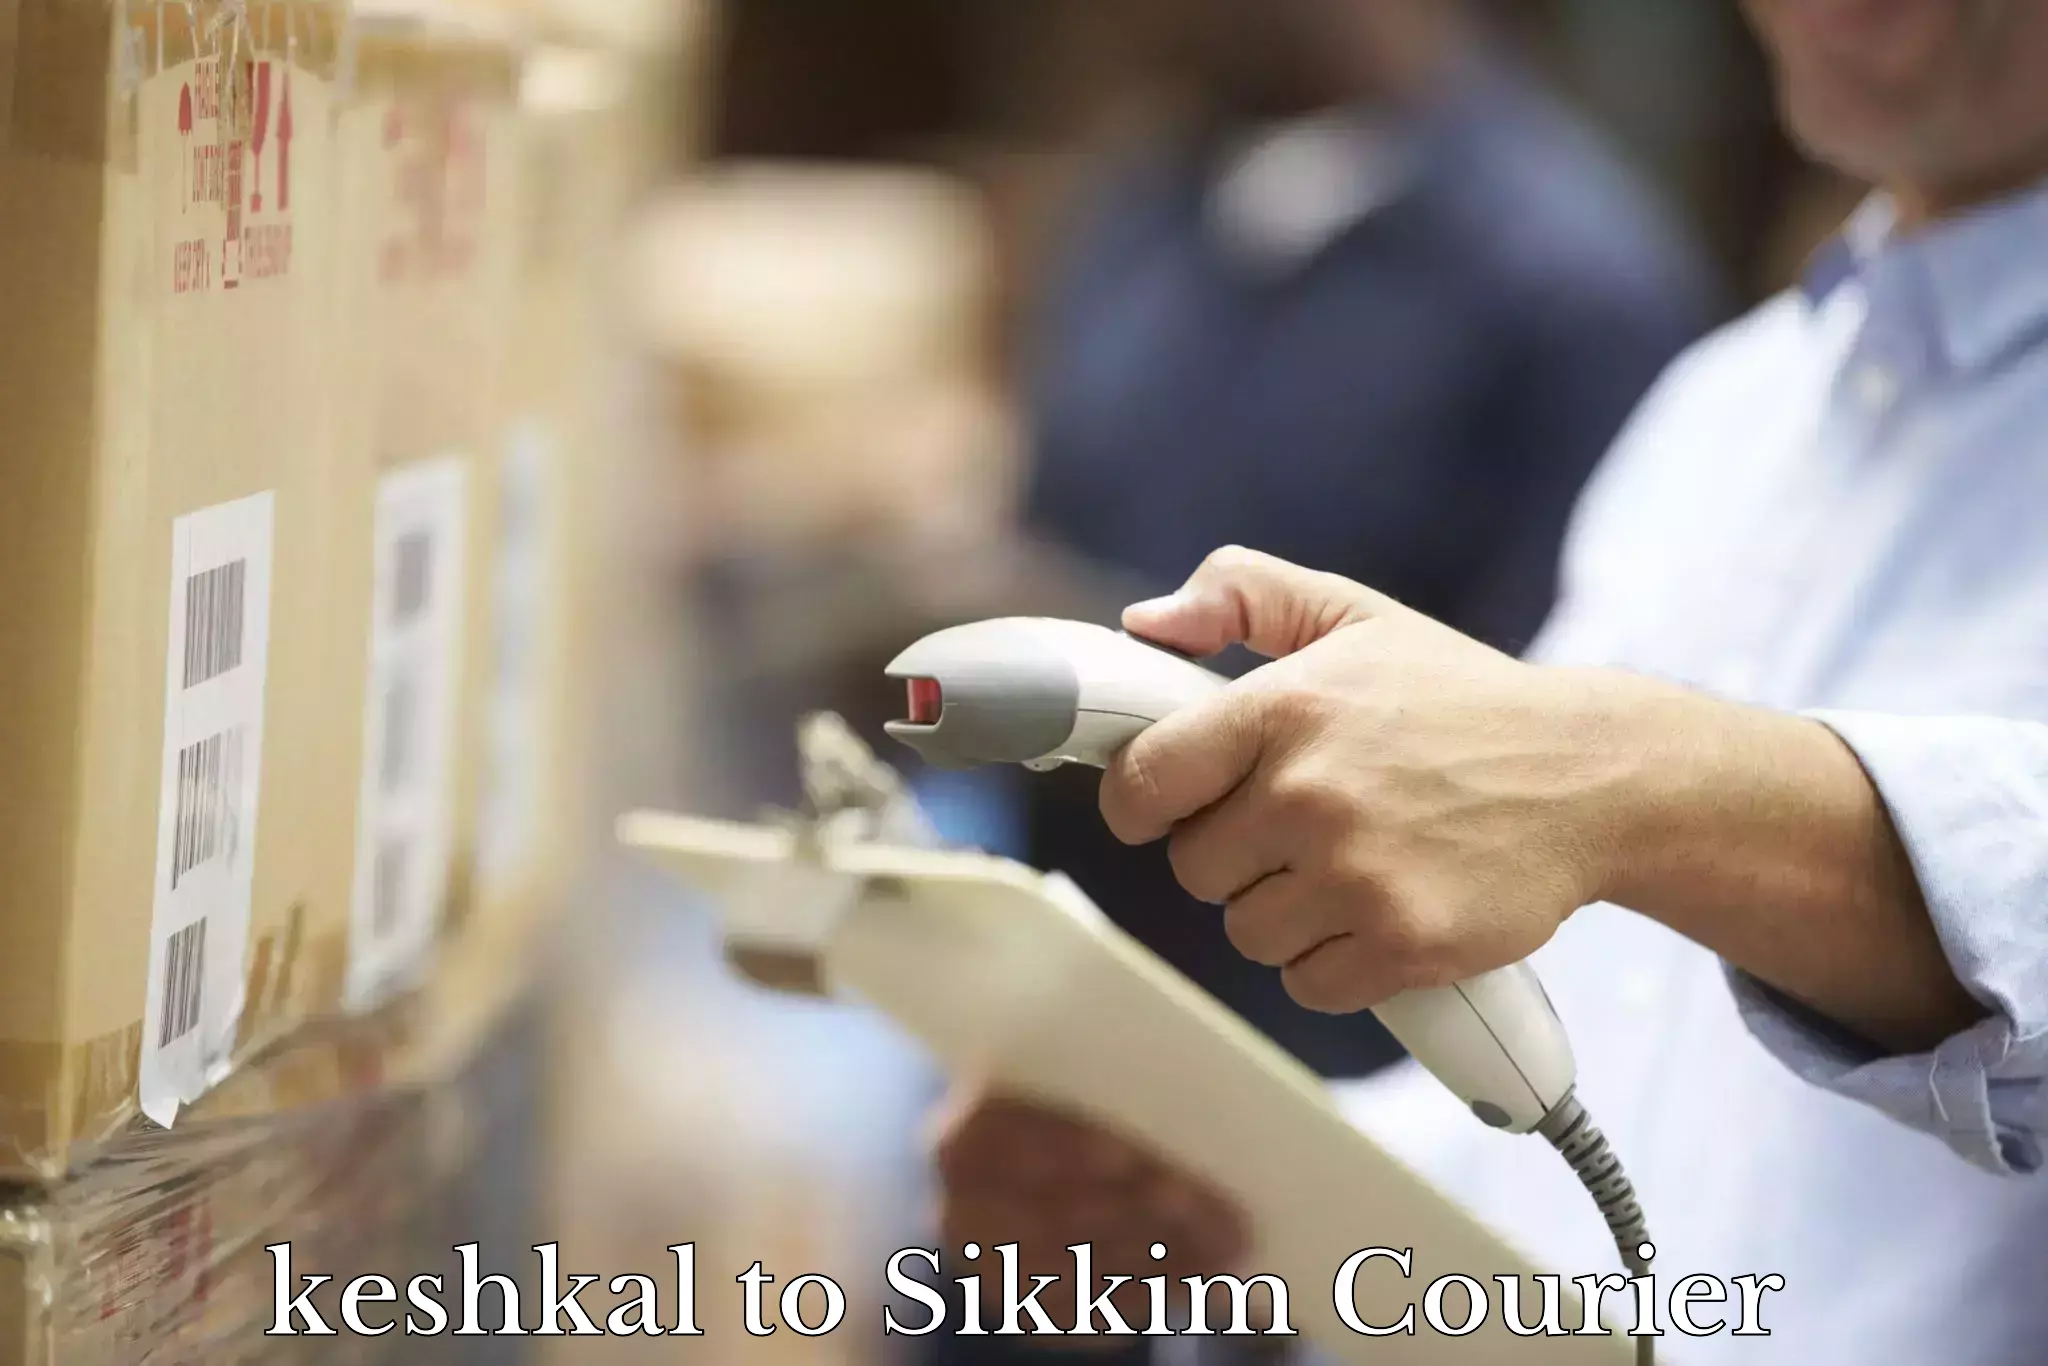 Modern delivery technologies in keshkal to Pelling